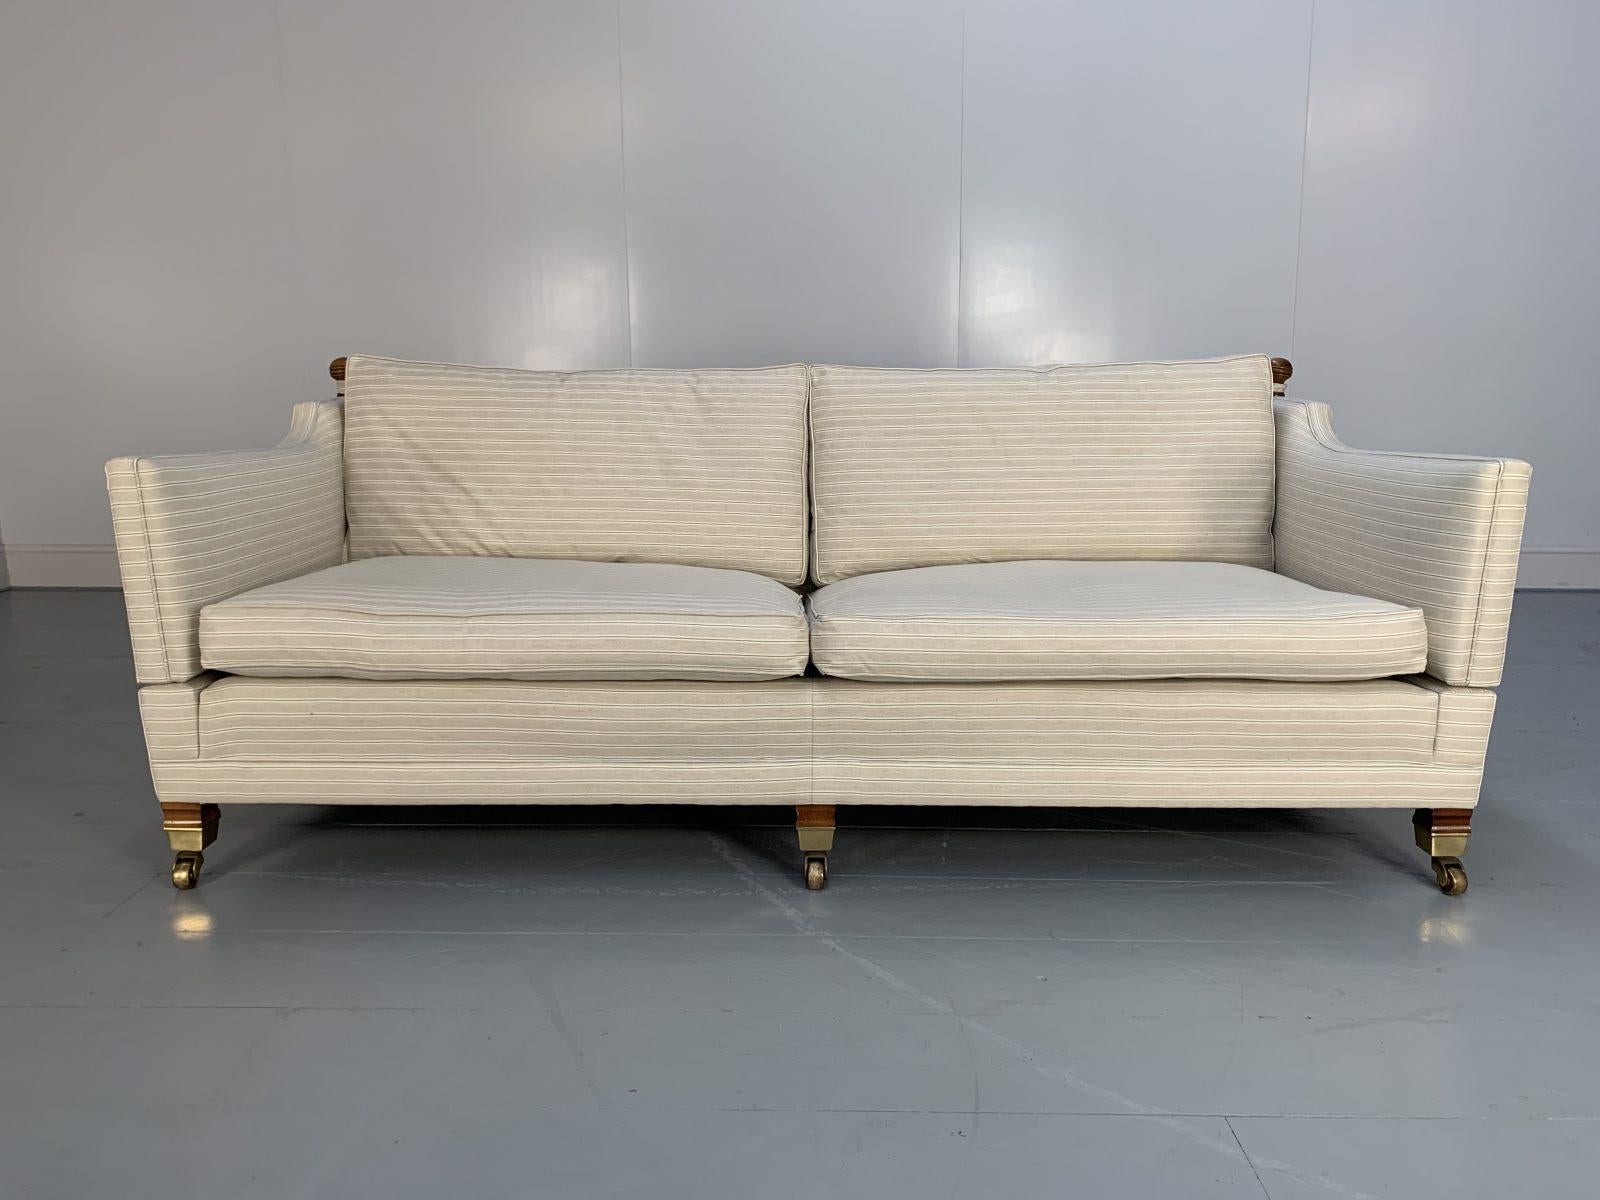 Duresta “Trafalgar” Sofa & 2 Armchair Suite – In Navy Pinstripe Linen In Good Condition For Sale In Barrowford, GB